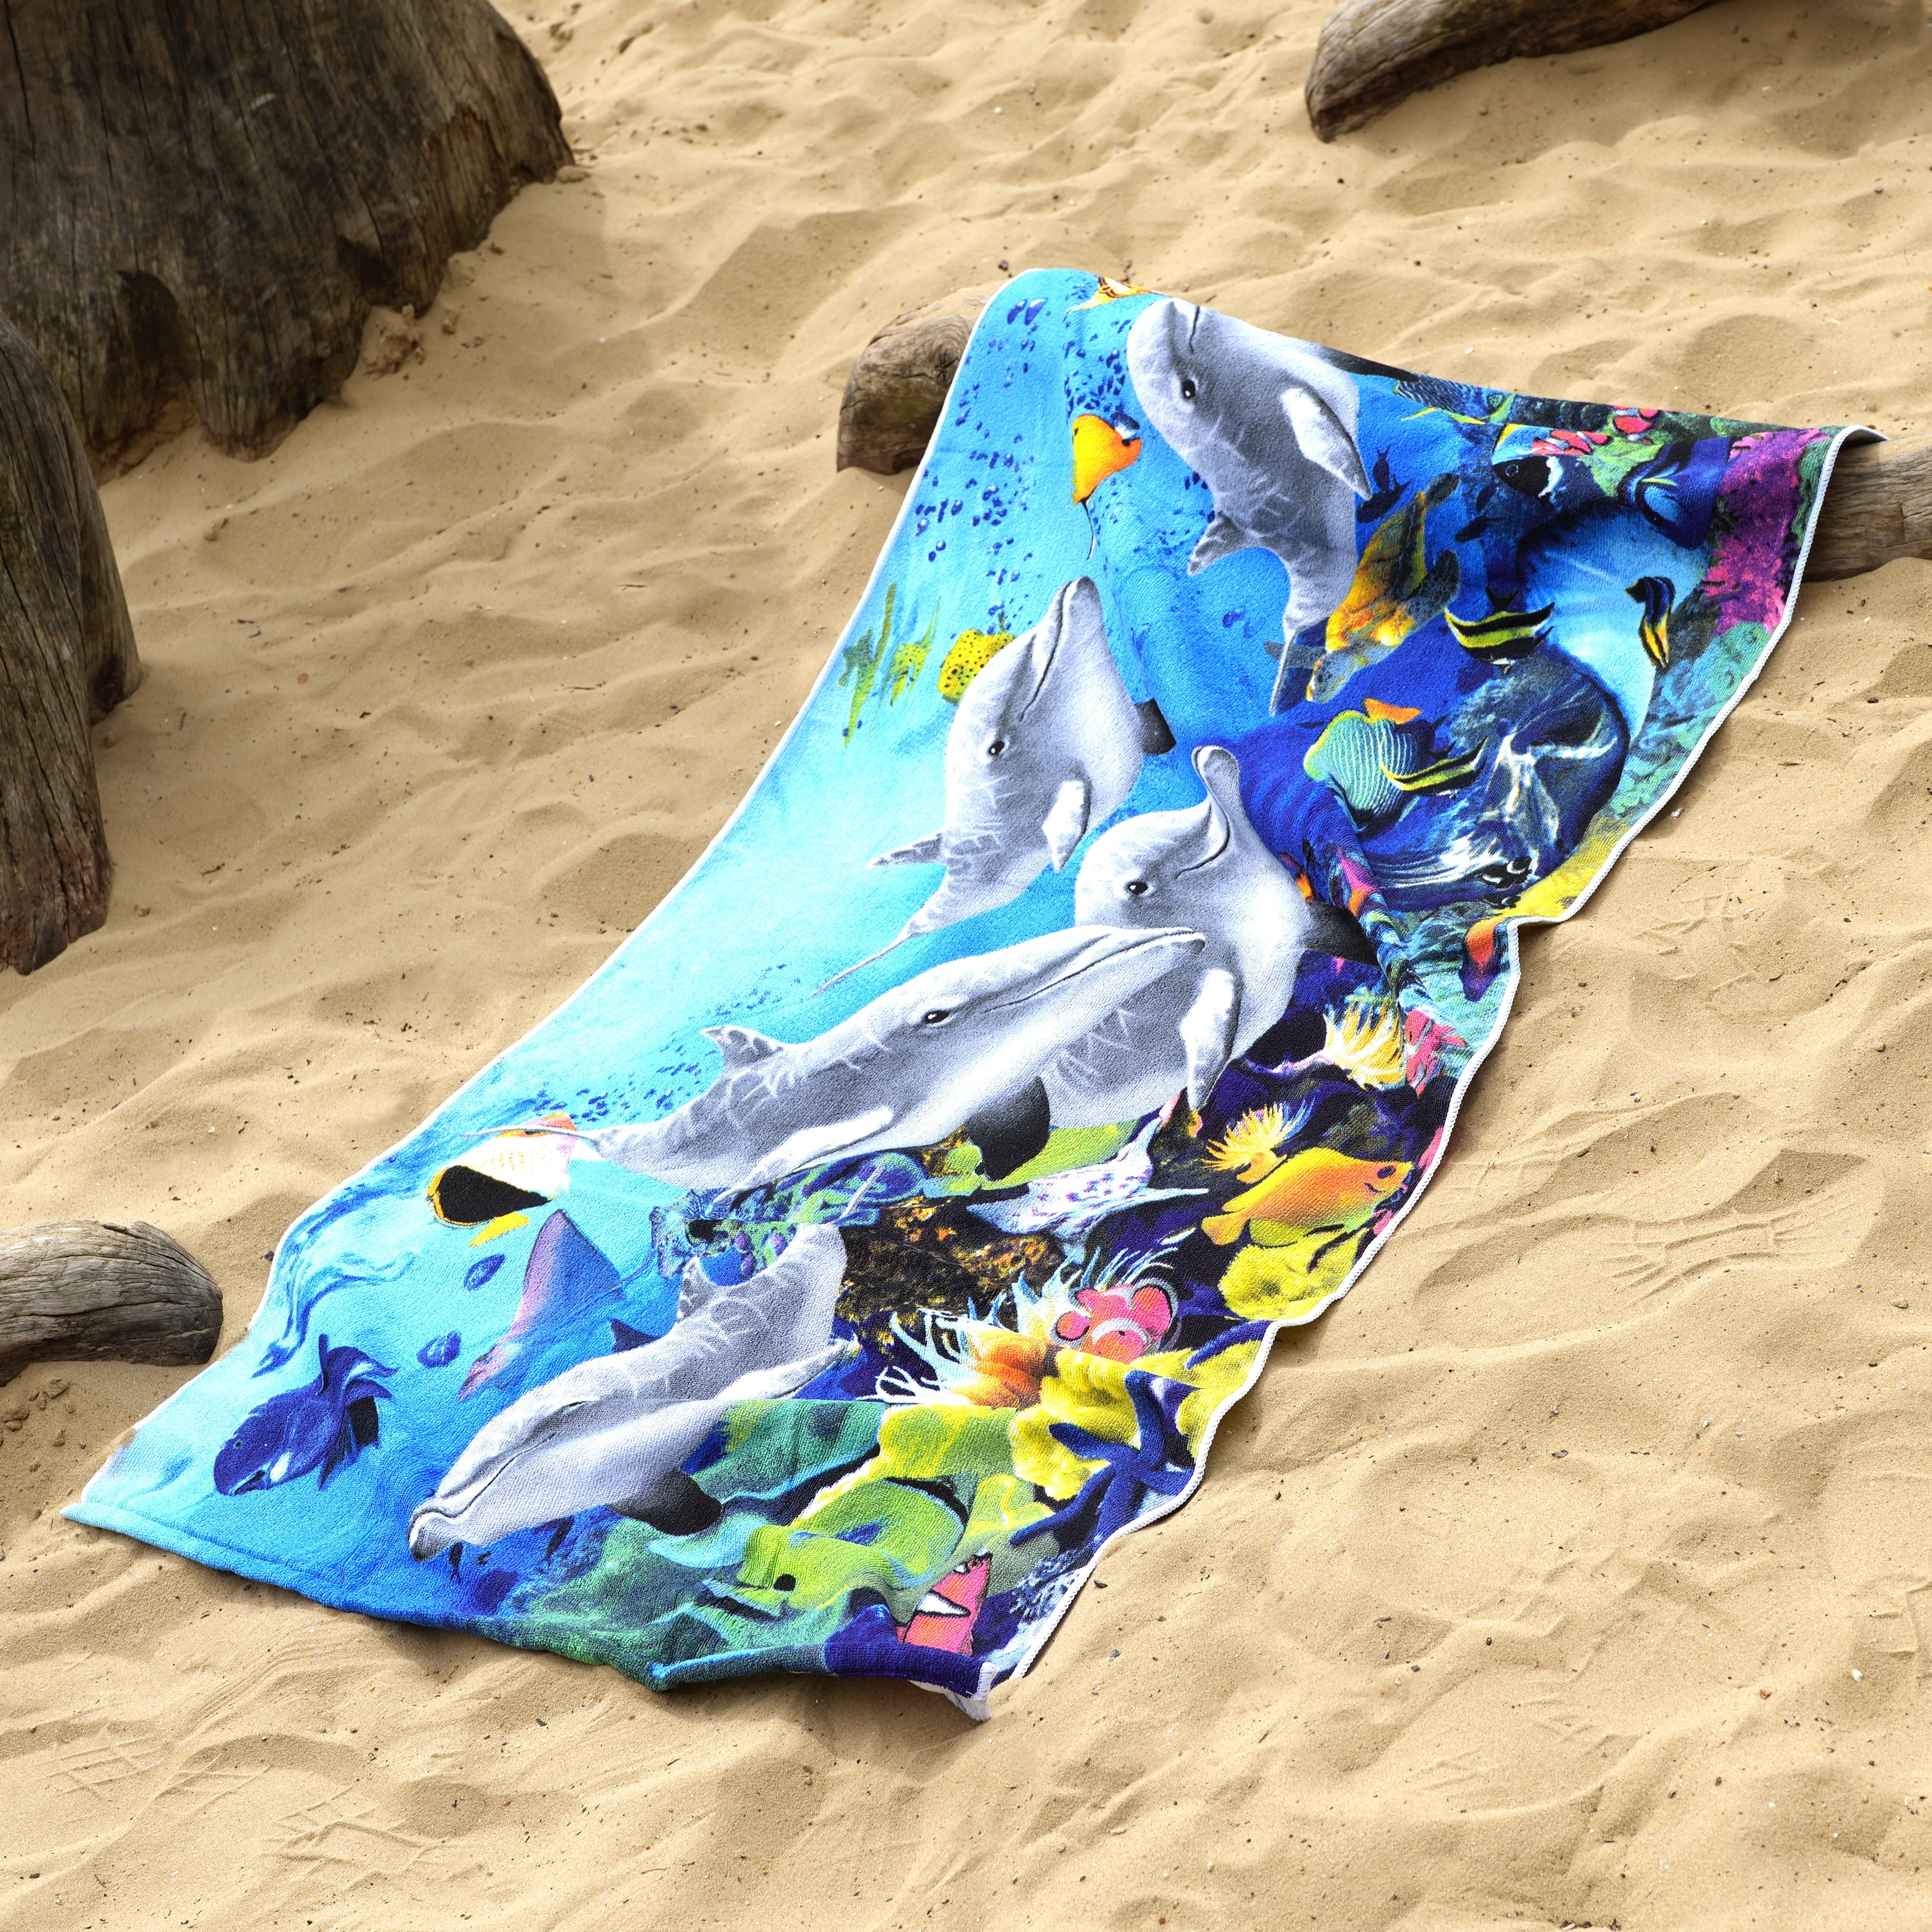 GEEZY Towel Dolphins Design Large Towel